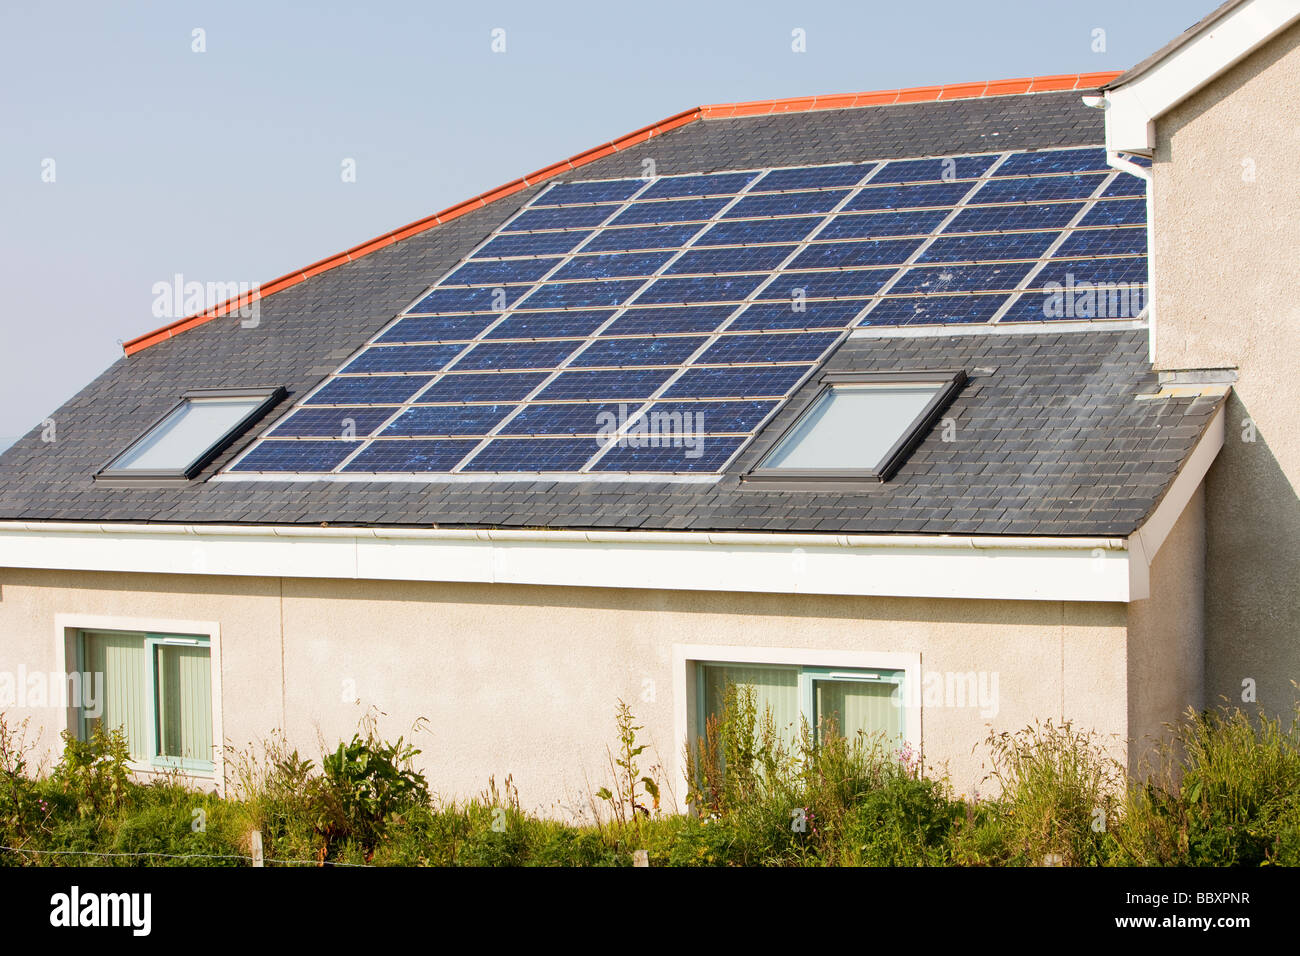 Solar-Elektro-Panels auf eine Schule Dach in Pendeen Cornwall UK Stockfoto